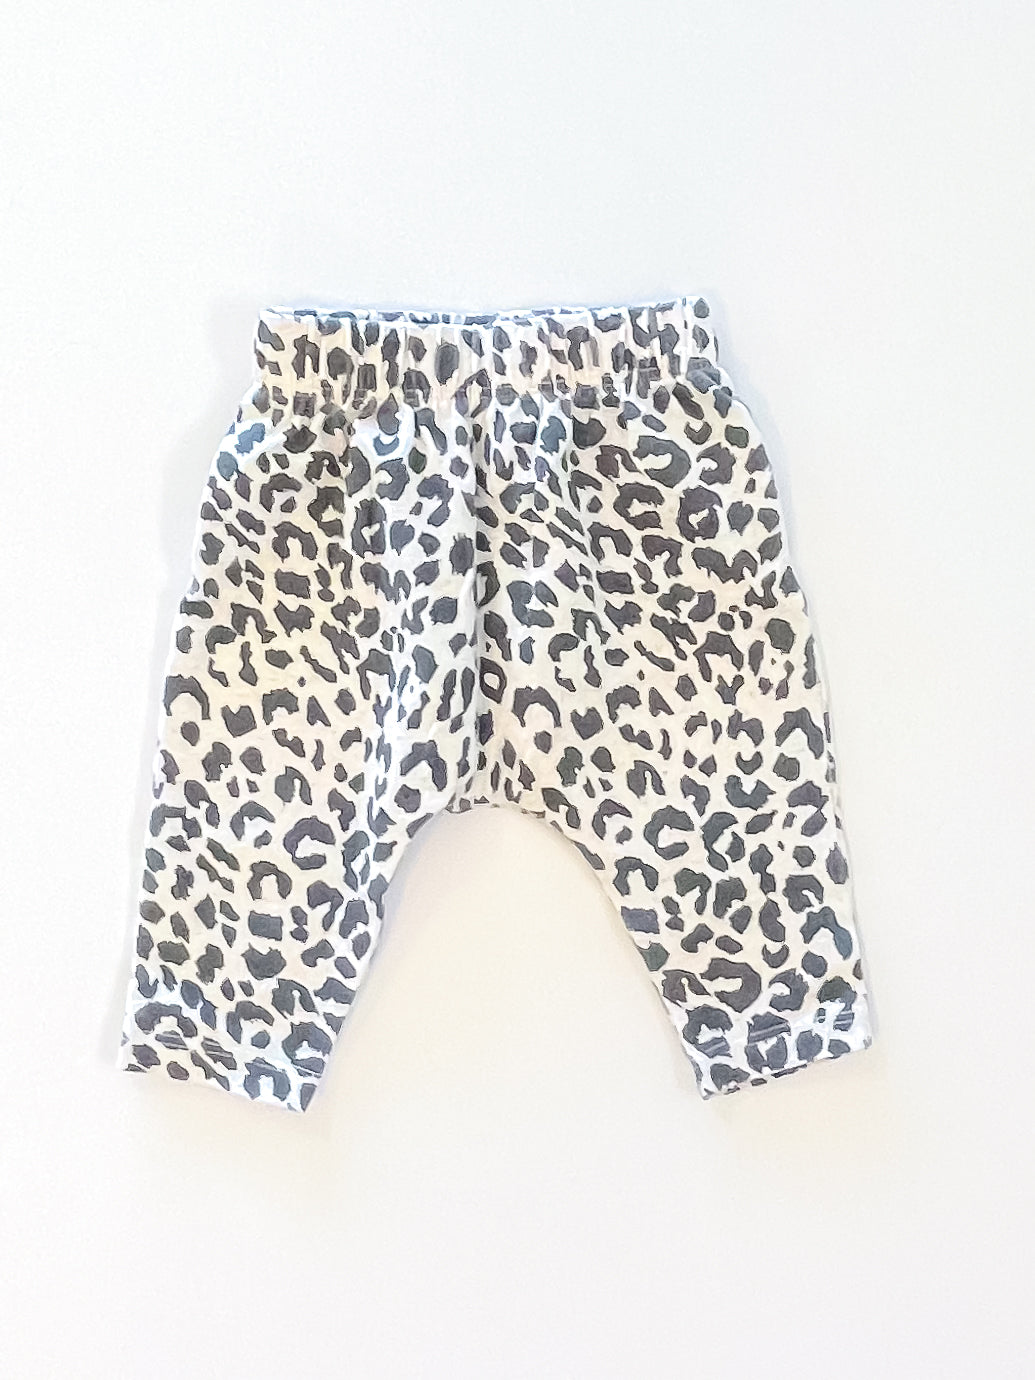 Cotton On Kids leopard leggings (newborn)